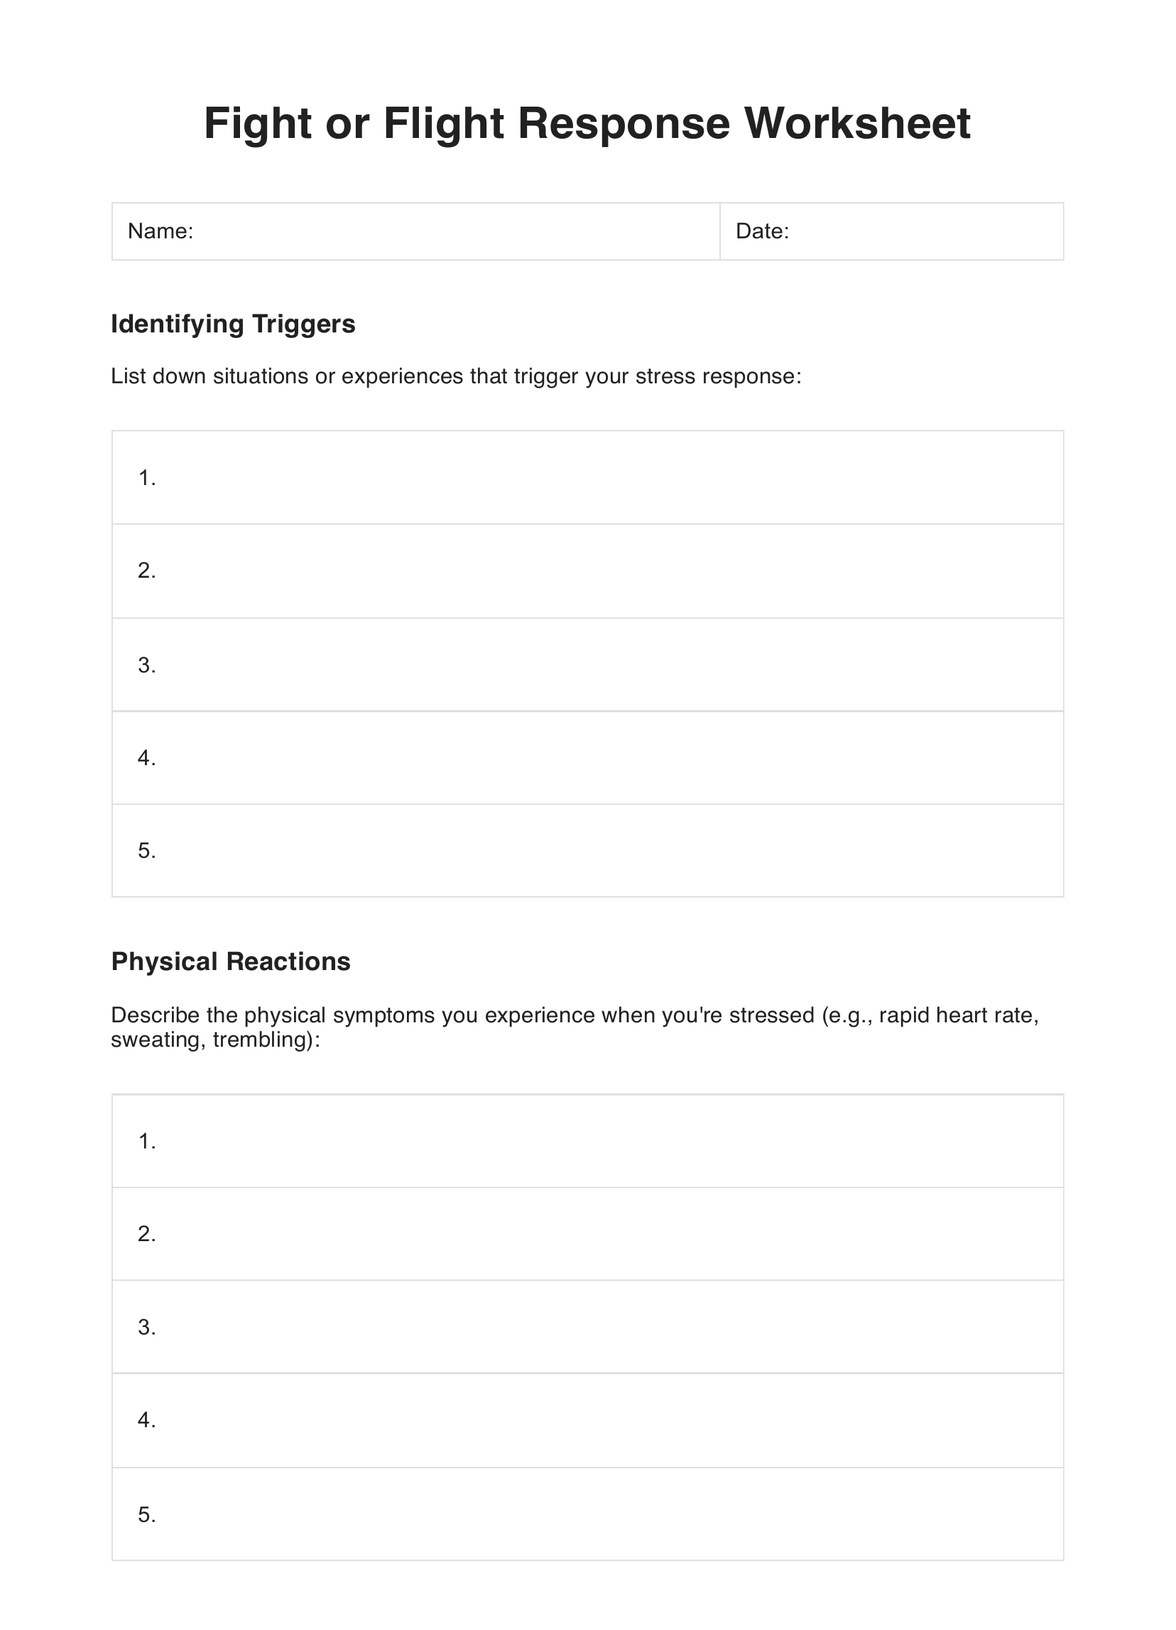 Fight Or Flight Response Worksheet PDF Example